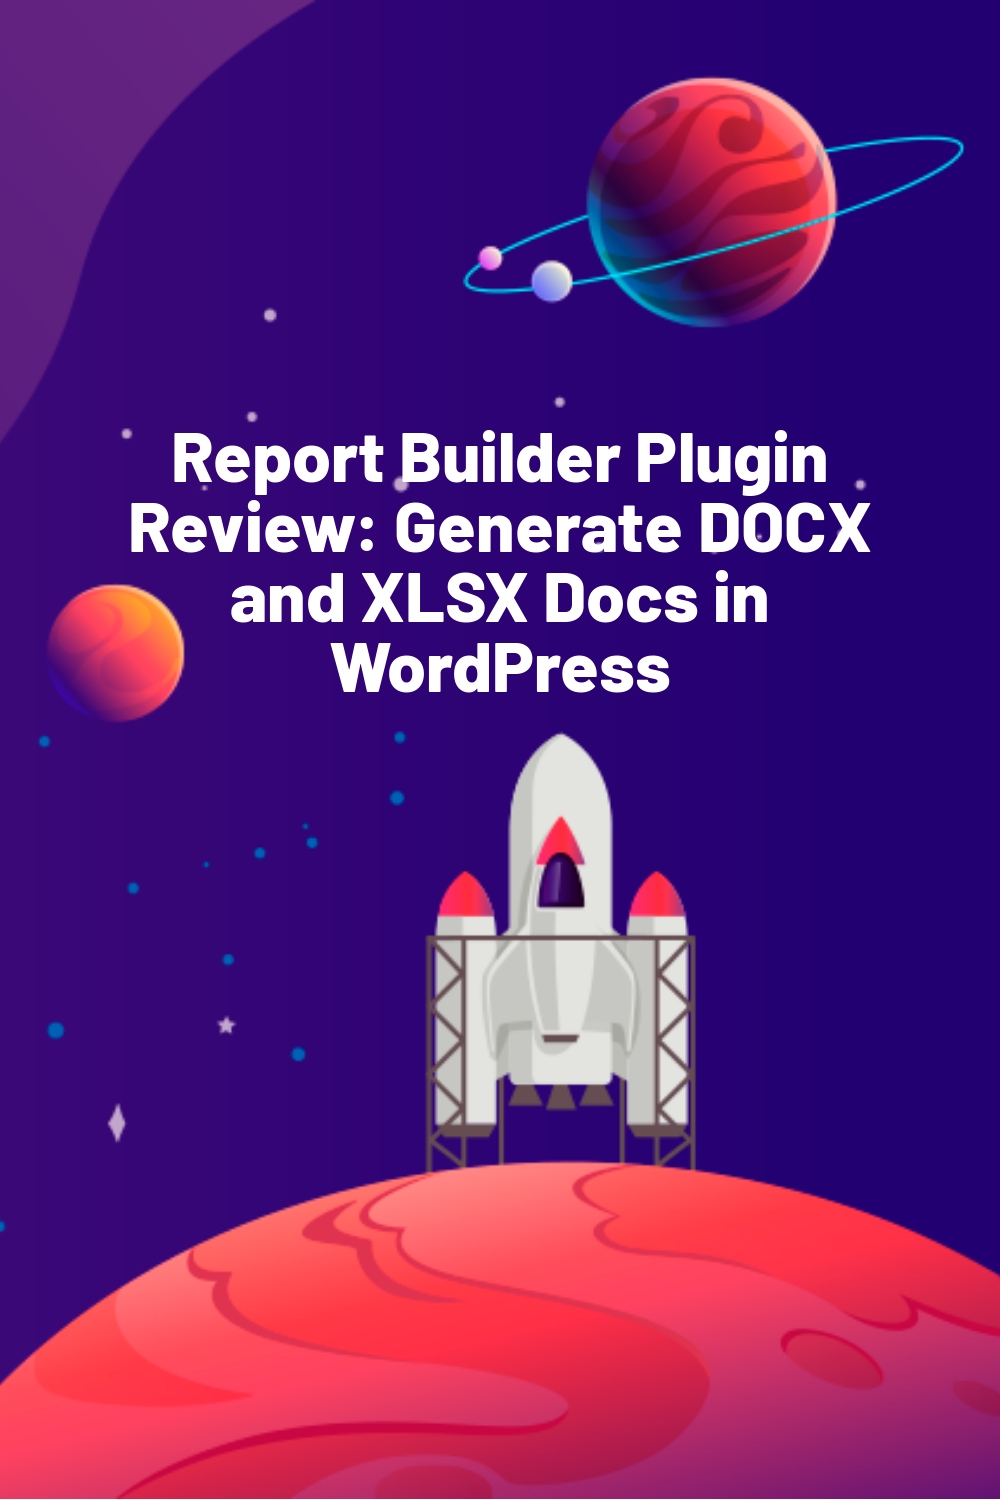 Report Builder Plugin Review: Generate DOCX and XLSX Docs in WordPress